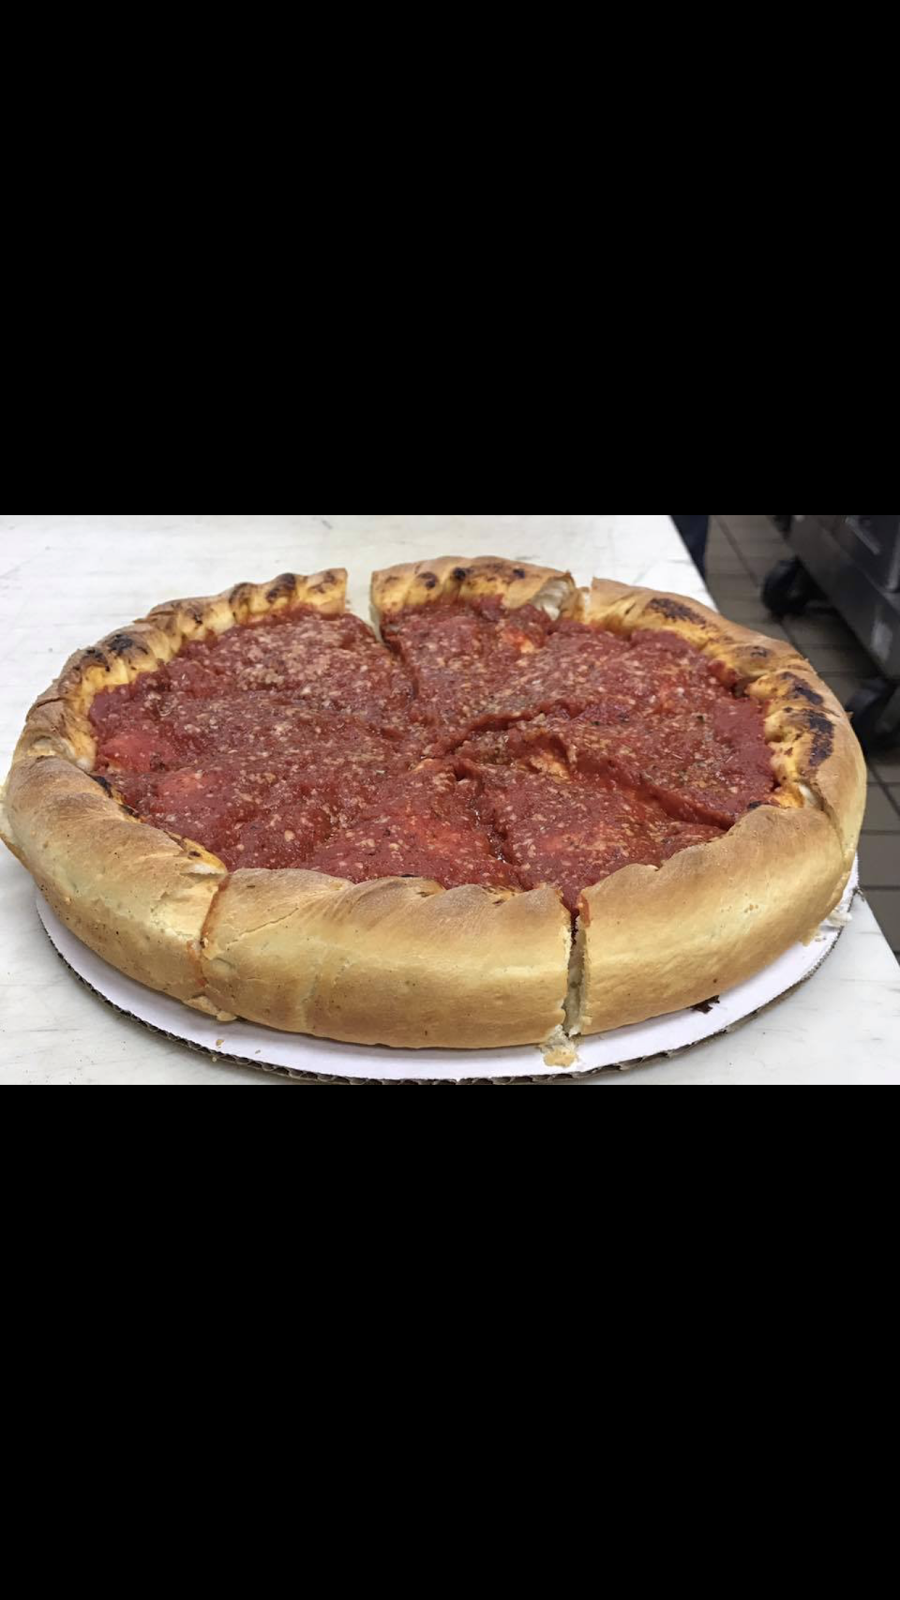 Rosatis Pizza | 826 Centennial Dr, Hampshire, IL 60140, USA | Phone: (847) 683-1111